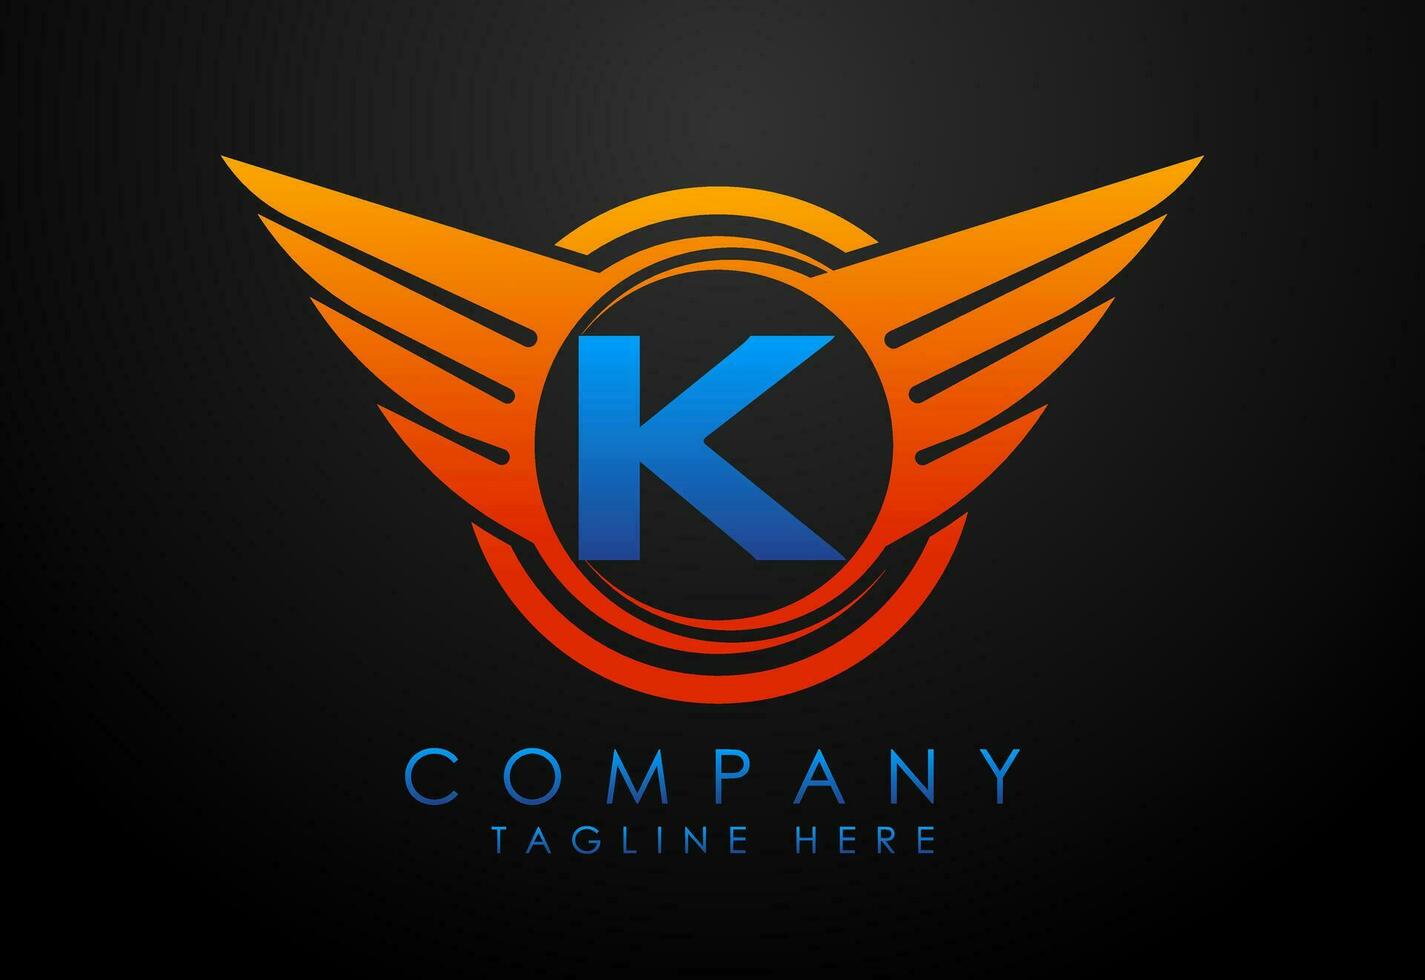 English alphabet K with wings logo design. Car and automotive vector logo concept